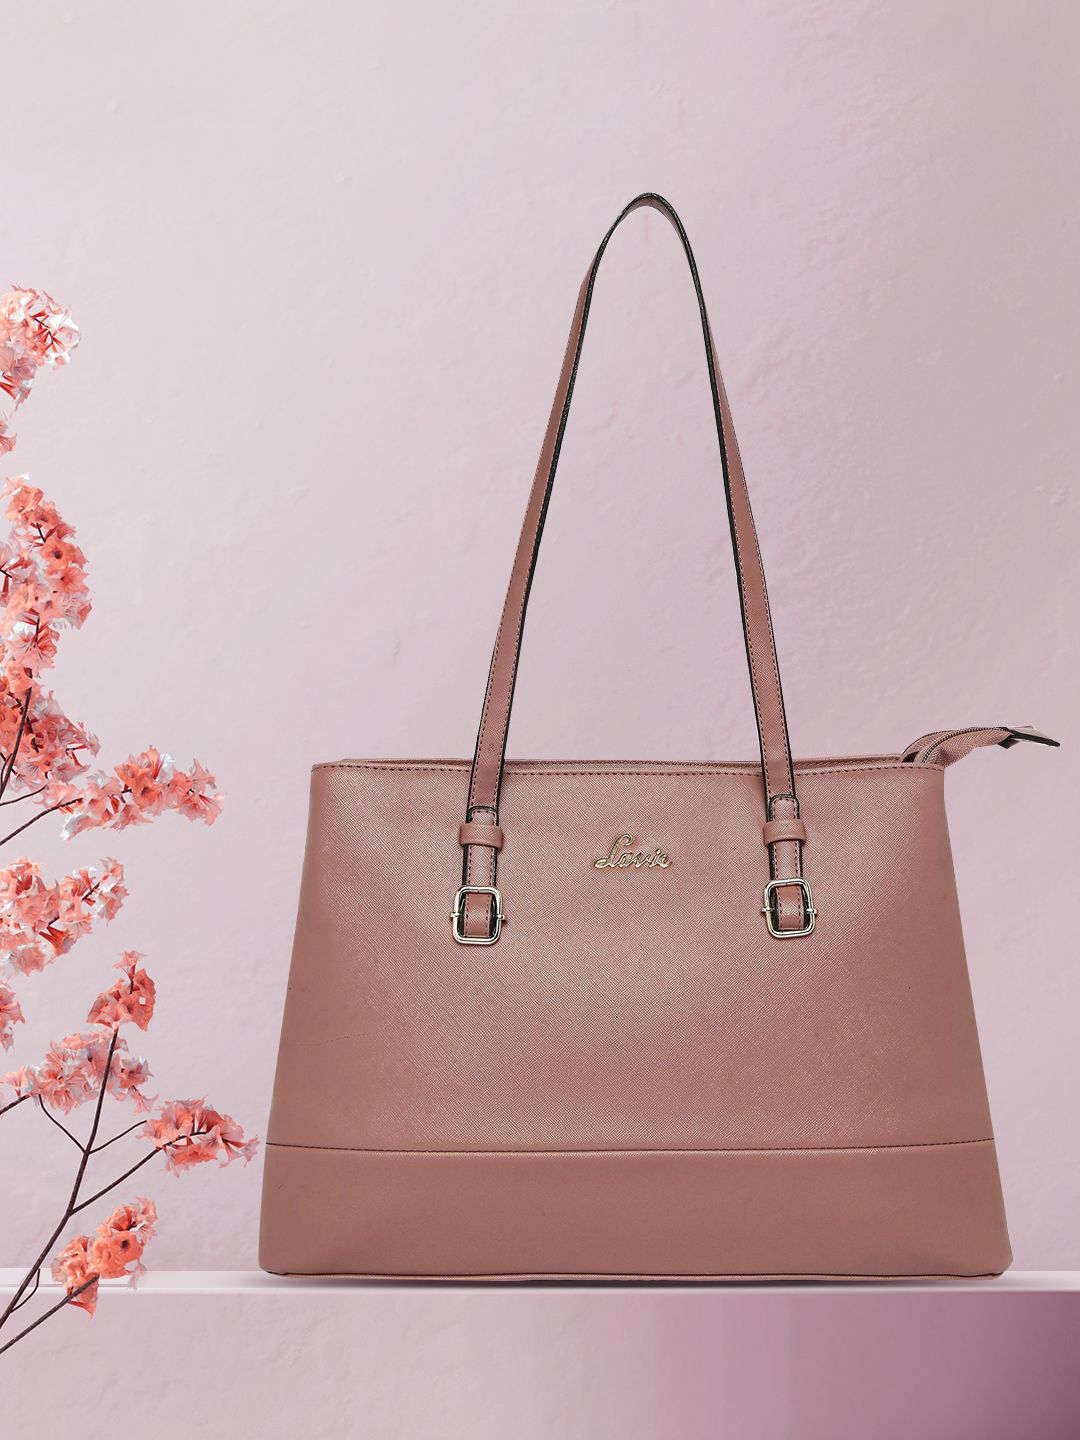 Lavie Pink Solid Shoulder Bag Price in India